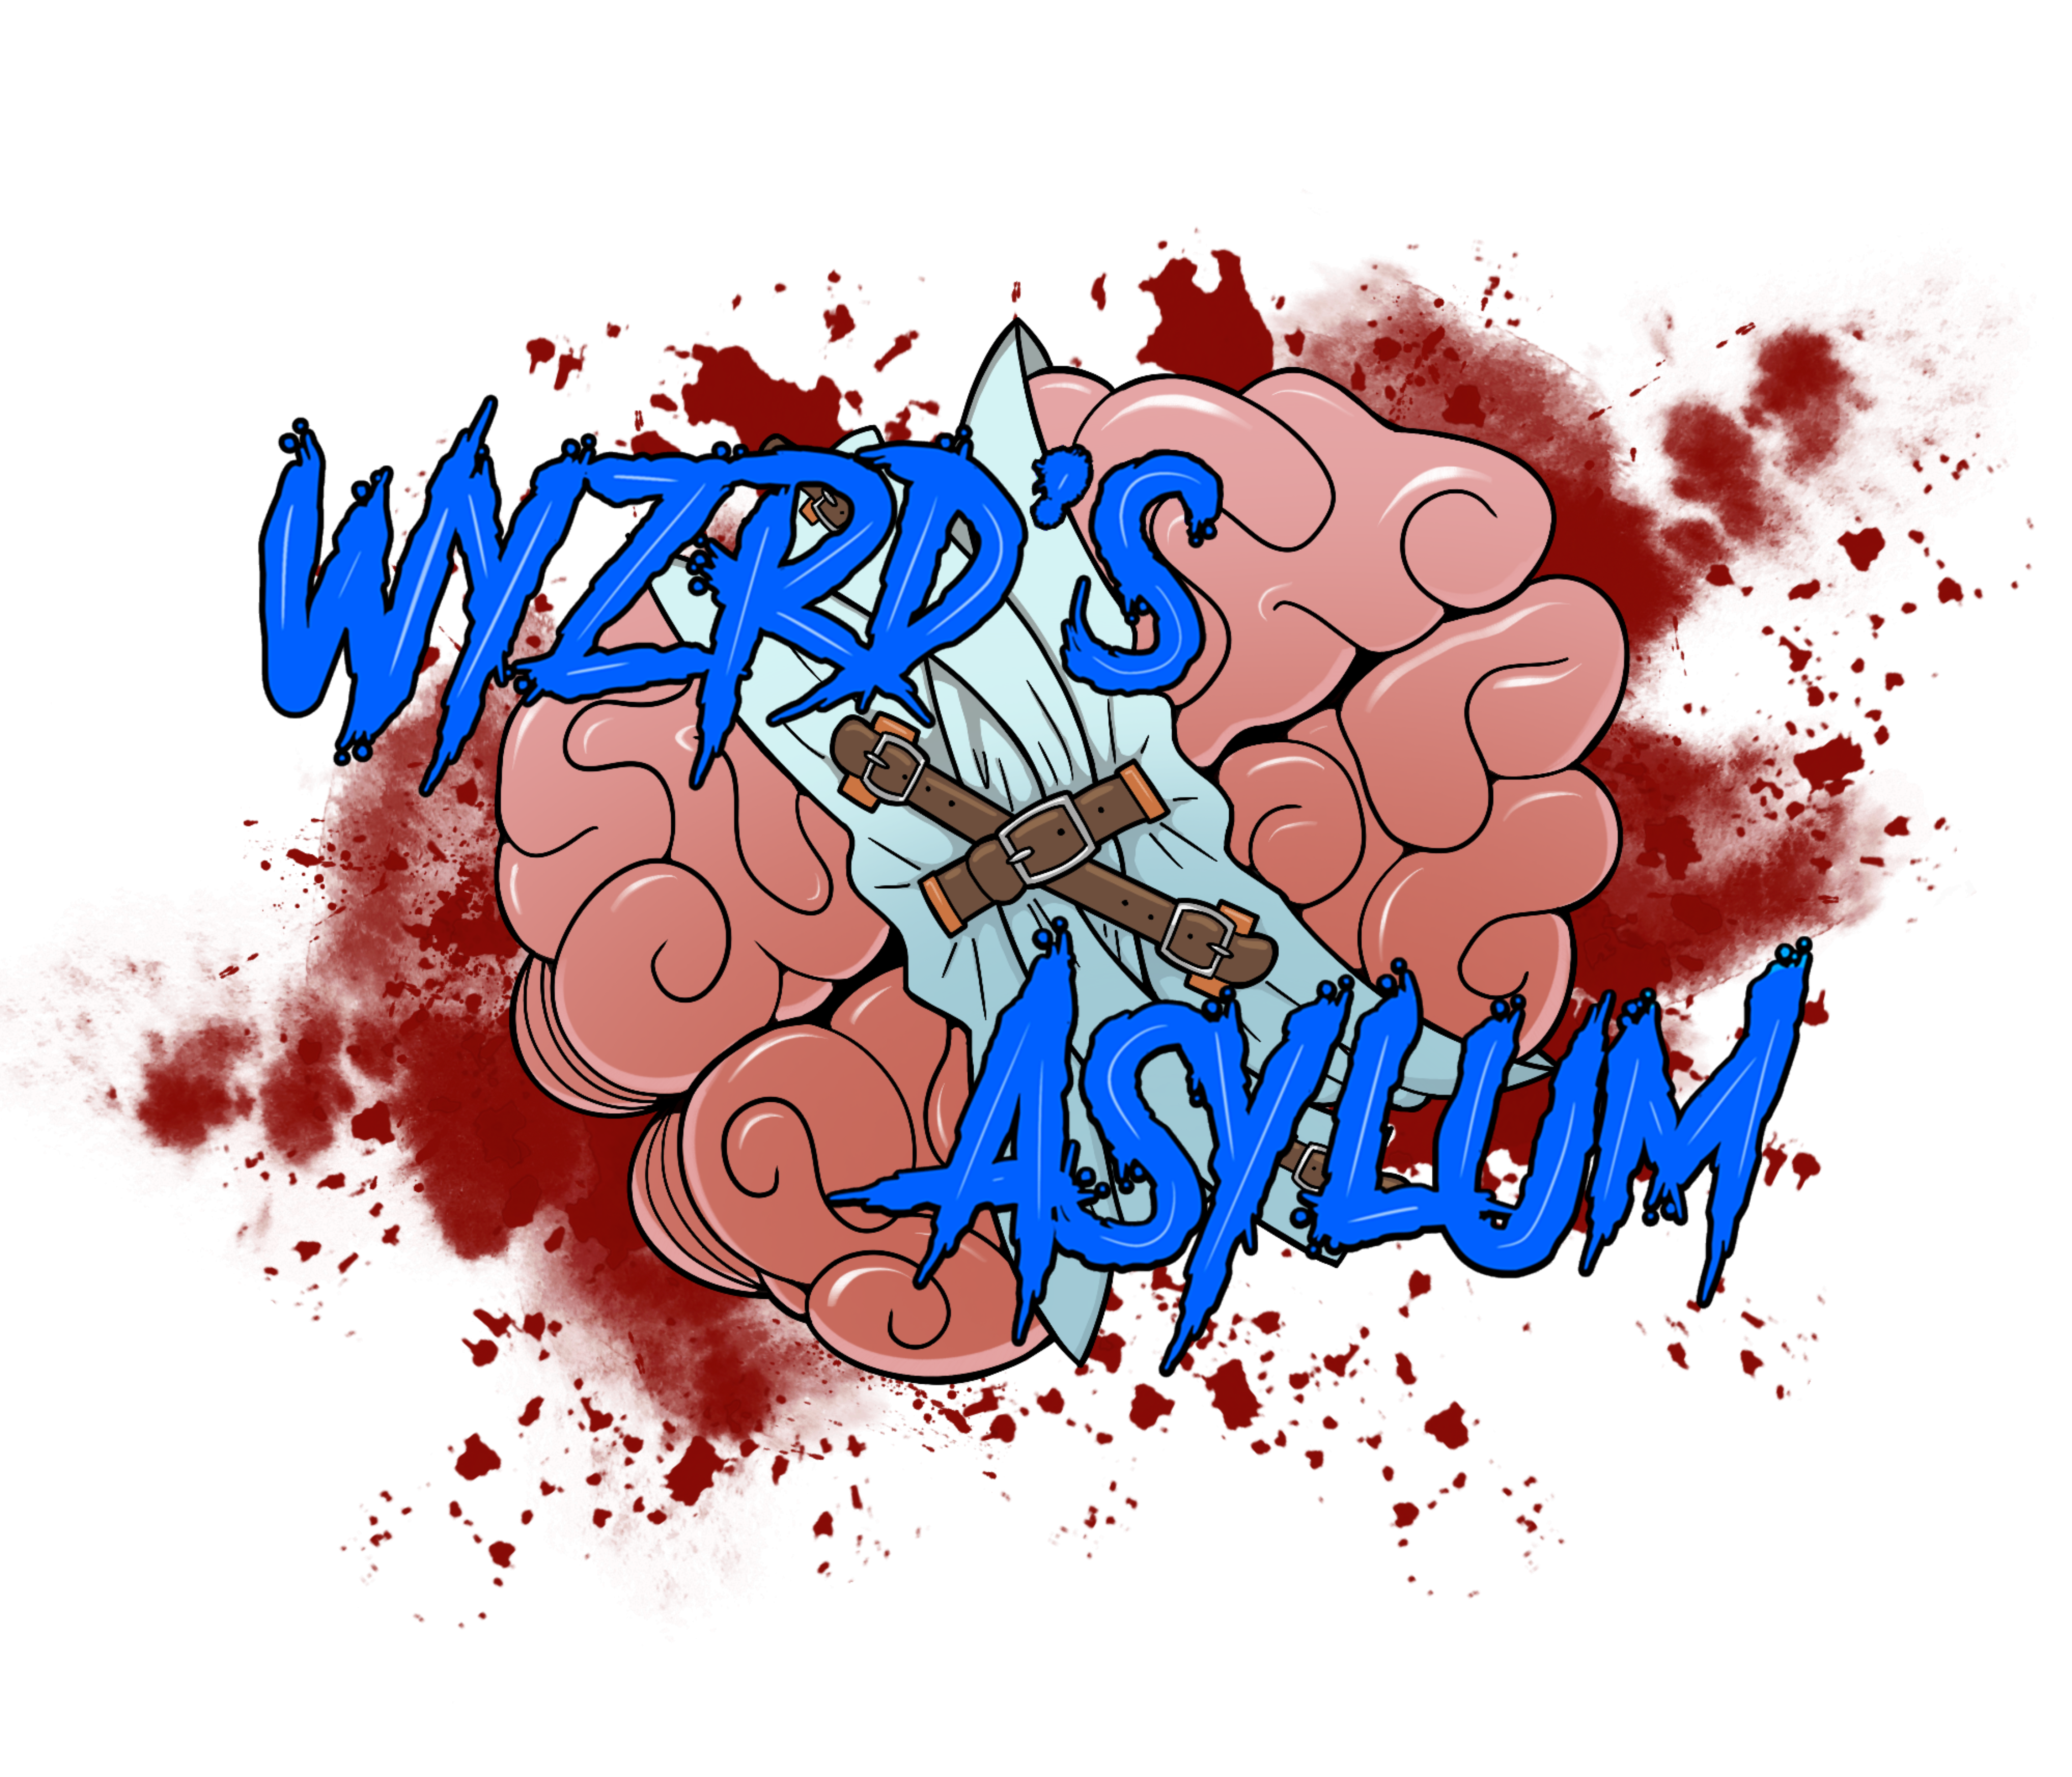 wyzrds asylum logo brain with words written over it in blue